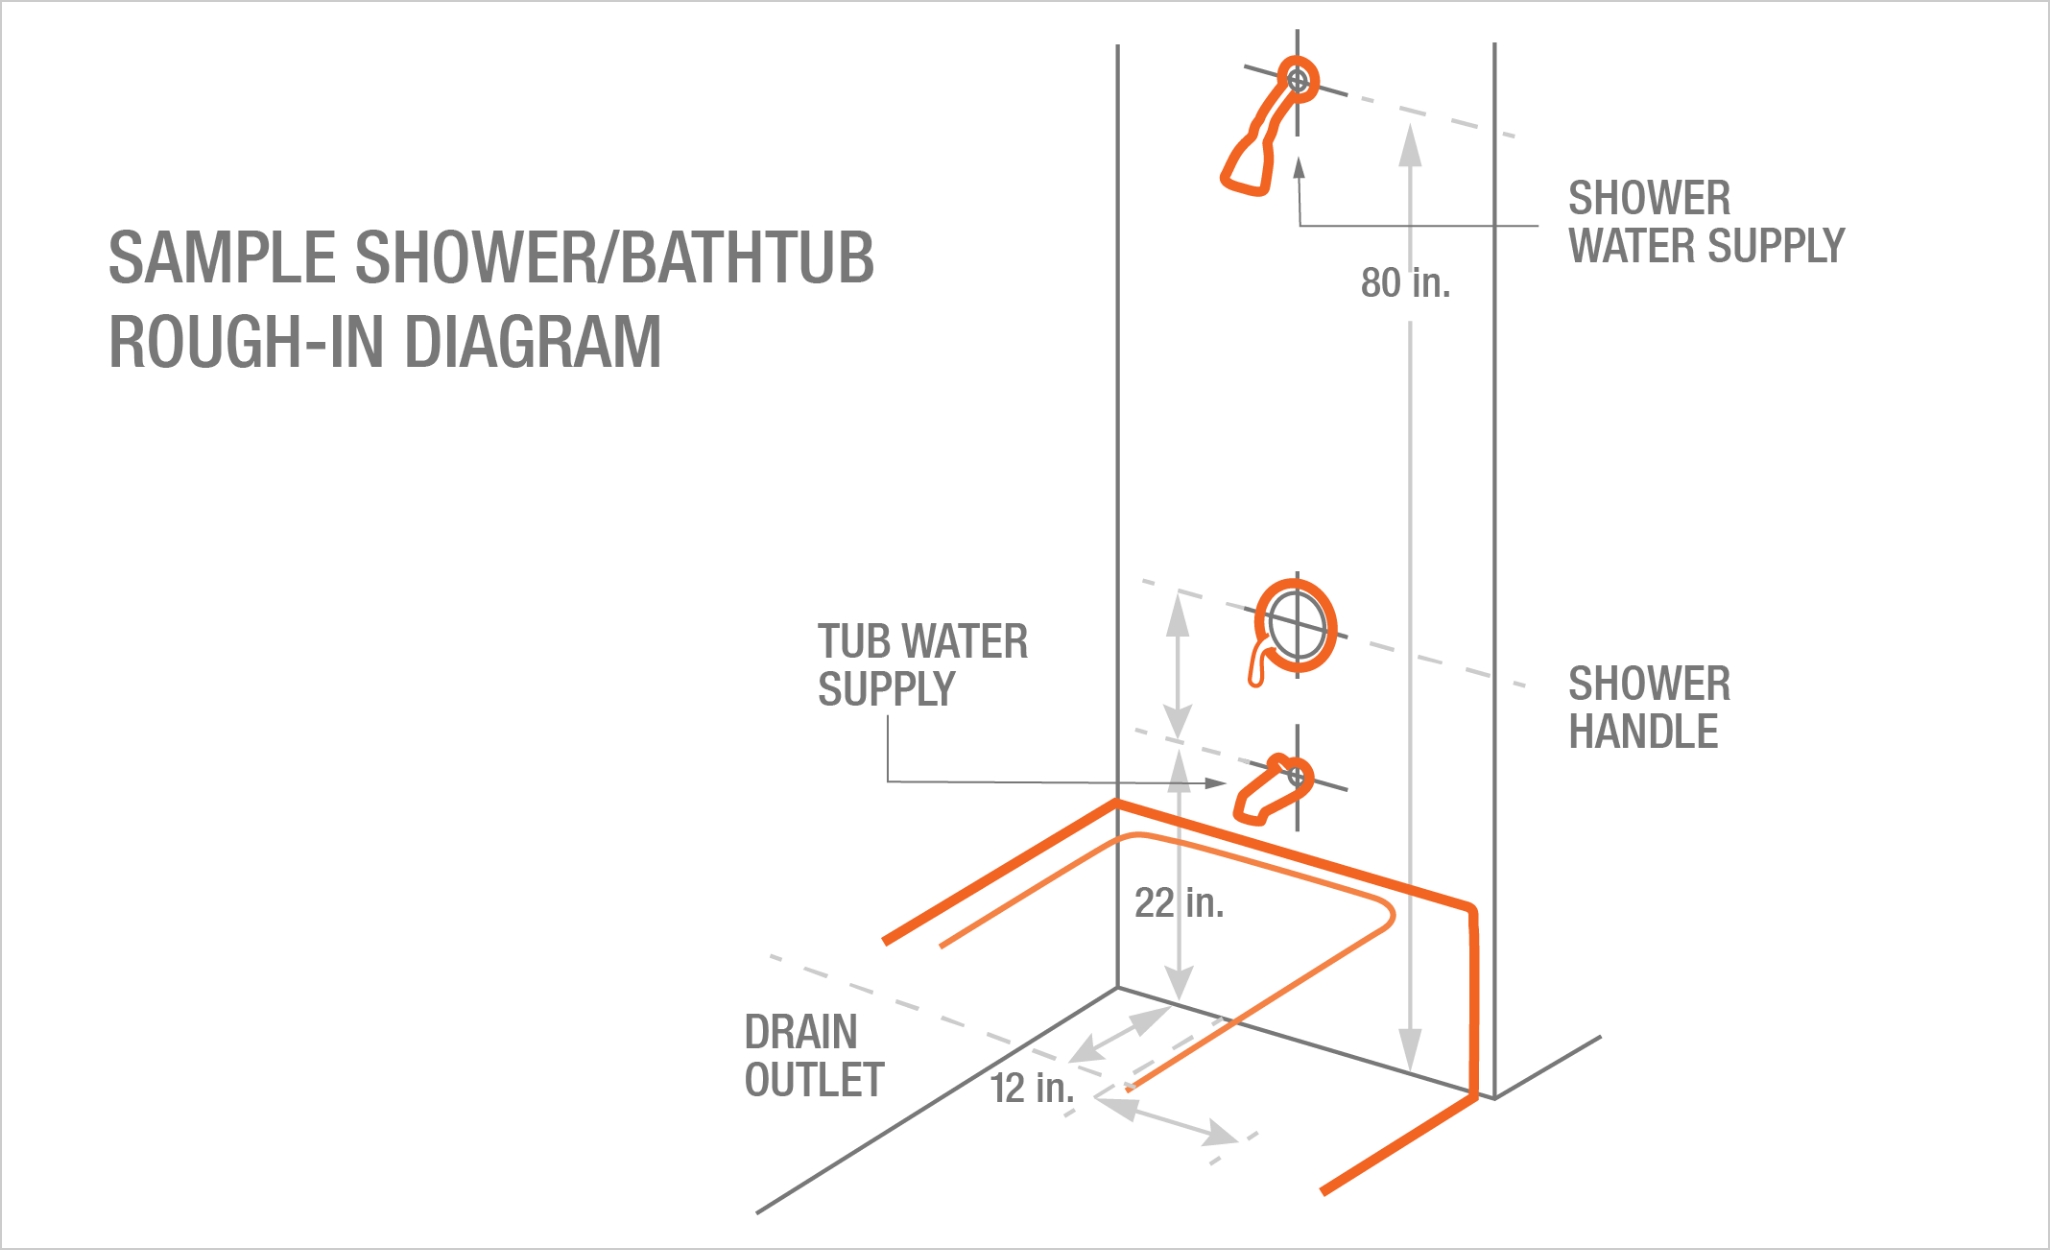 Sample shower/bathtub rough-in diagram